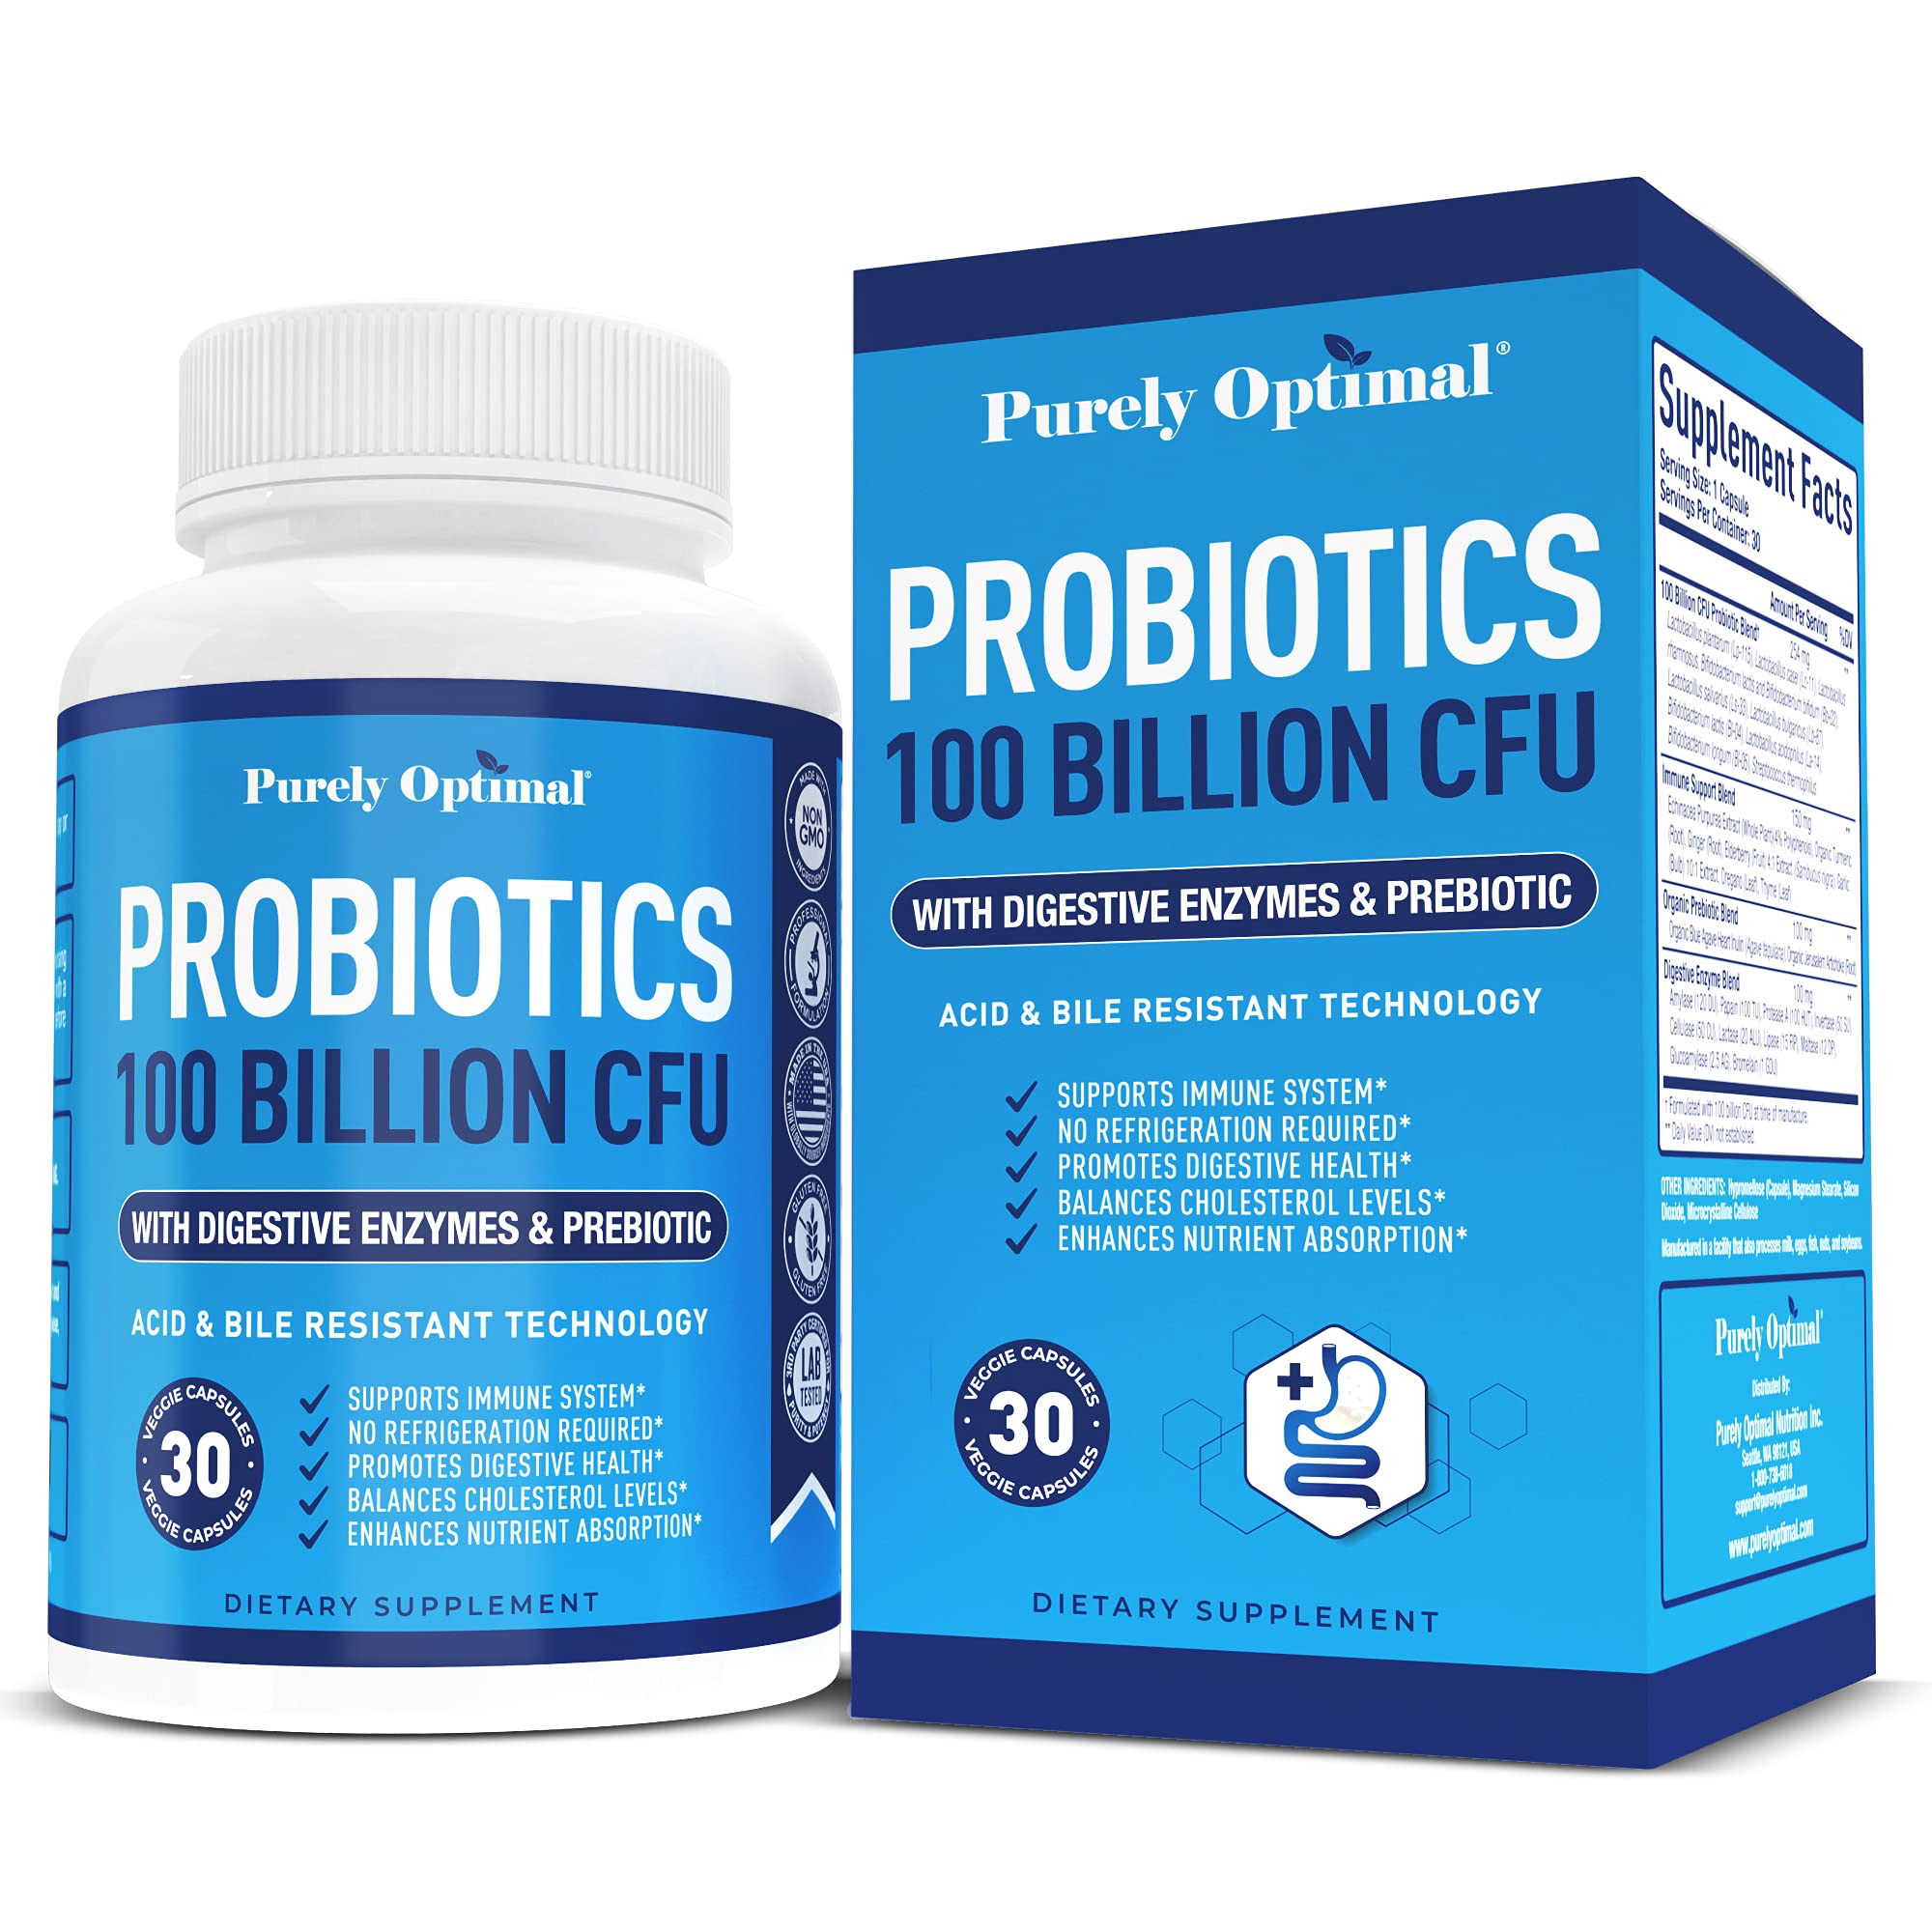 Purely Optimal Premium Probiotics 100 Billion CFU w/Digestive Enzymes - Organic Prebiotics & Immune Support, Dr. Formulated Probiotics for Men & Women for Gut Health - 30 Capsules